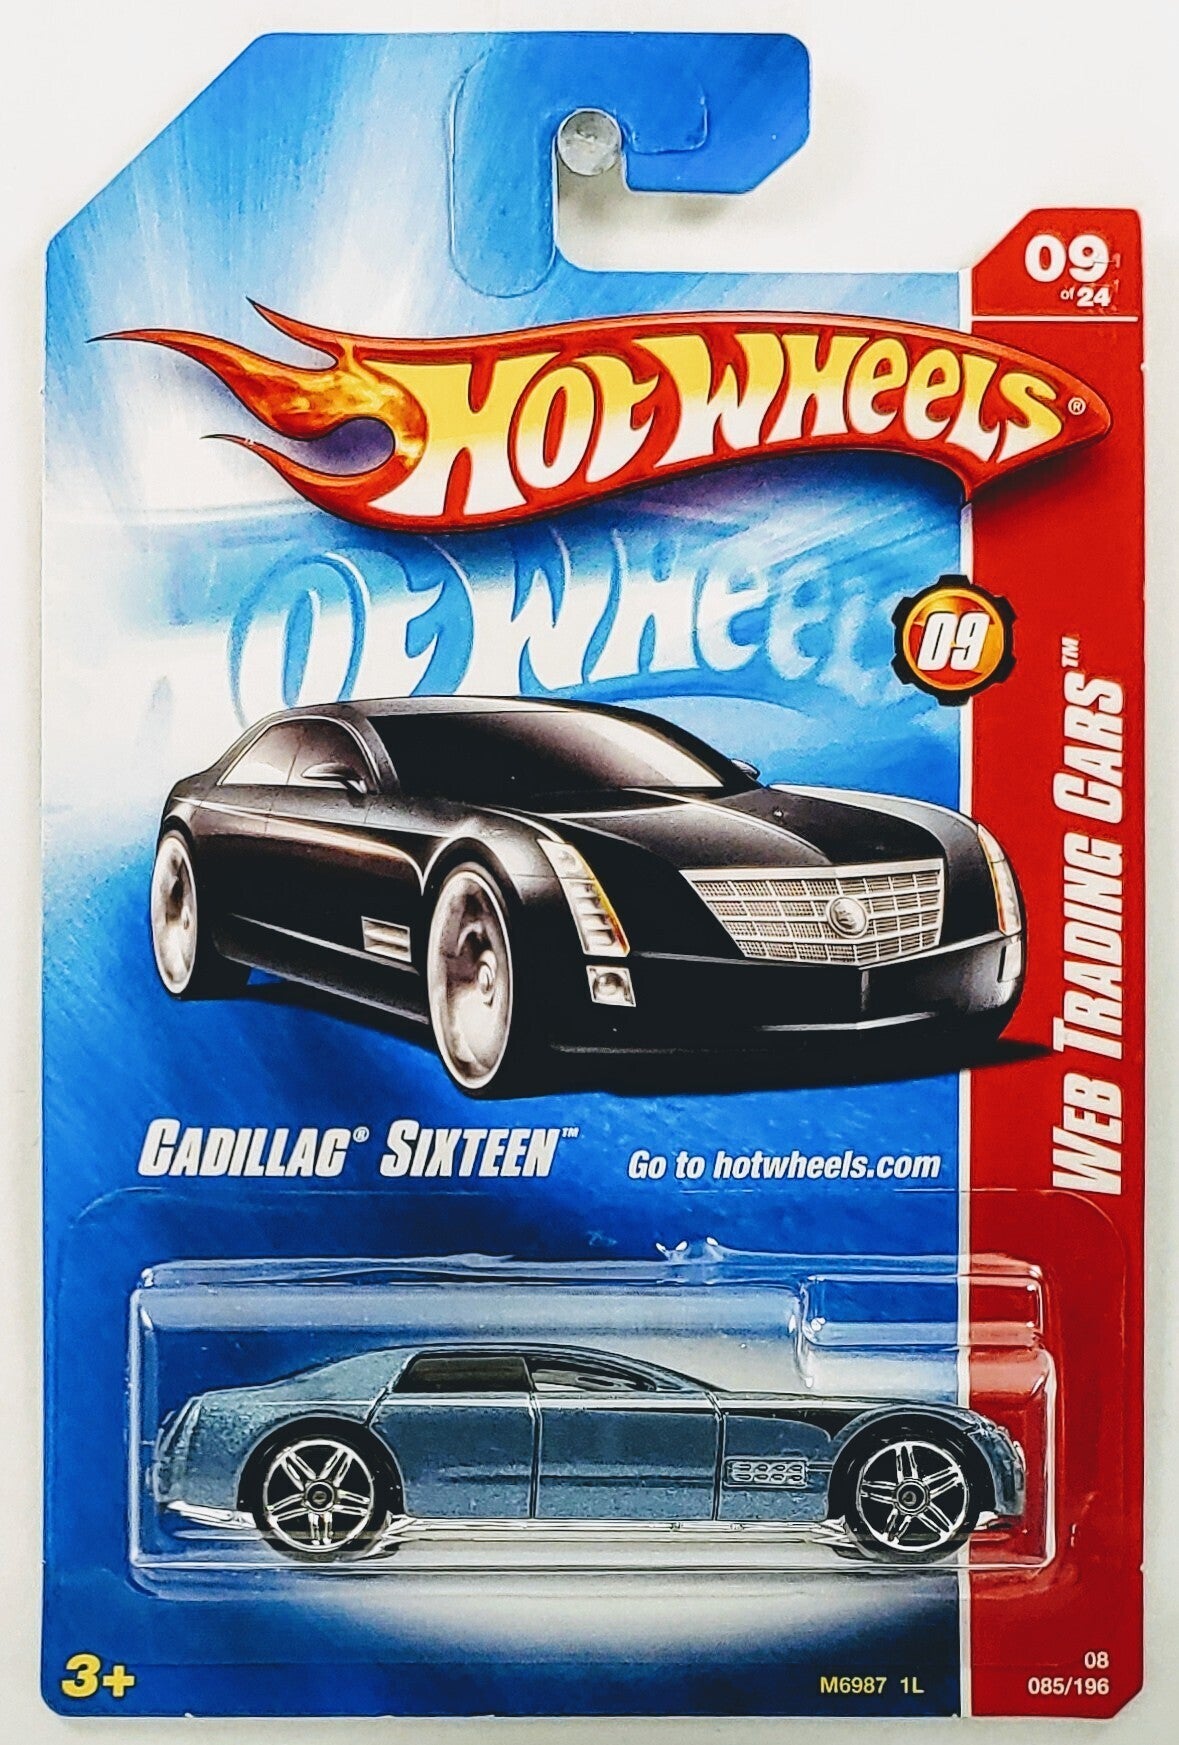 Hot Wheels 2008 - Collector # 085/196 - Web Trading Cars 09/24 - Cadillac Sixteen - Metallic Steel Blue - PR5 Wheels - USA Card